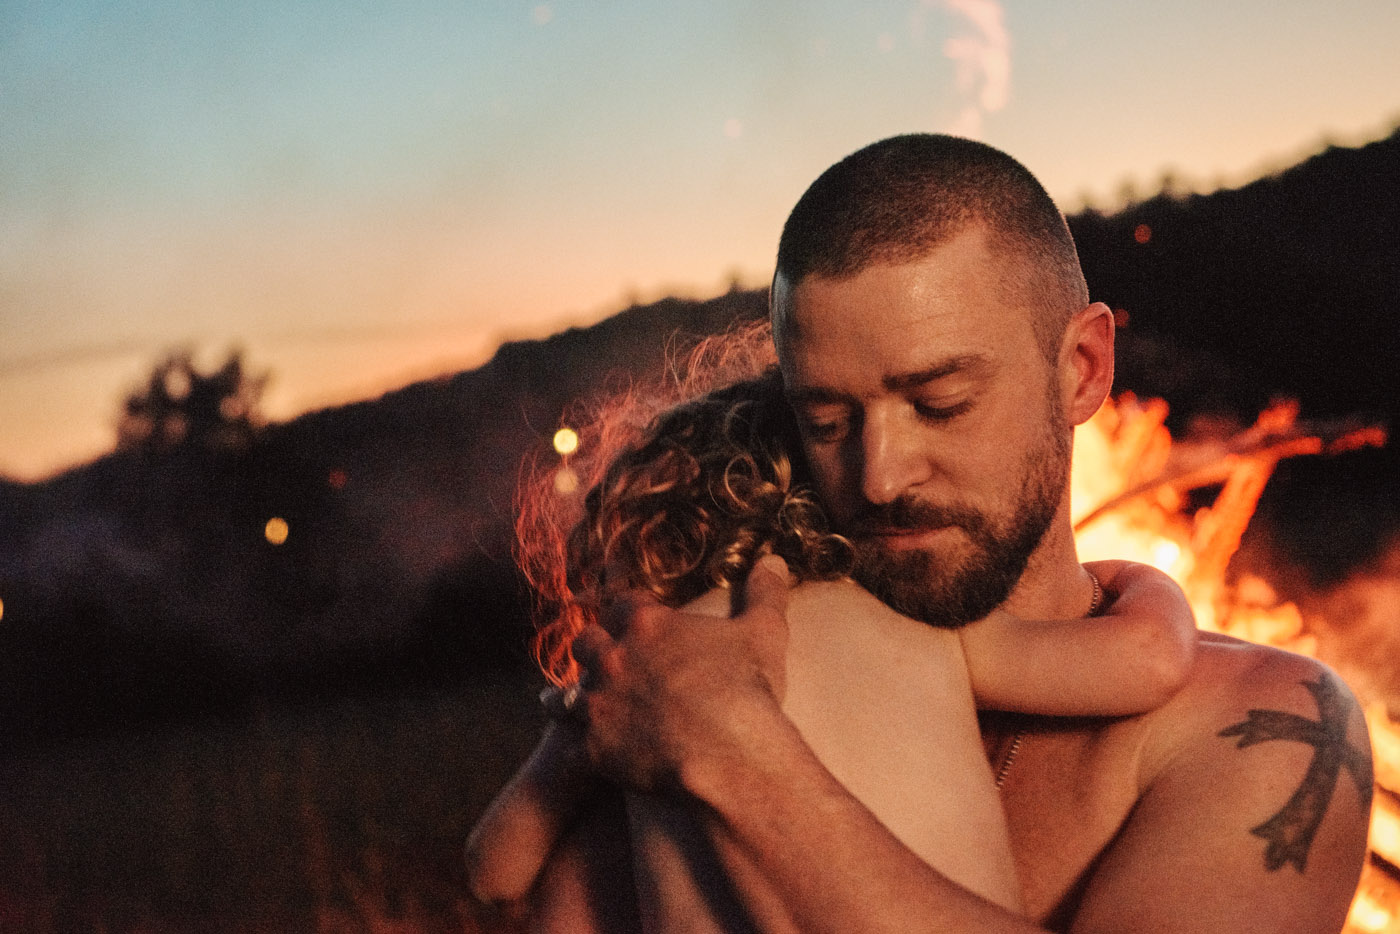  Justin Timberlake, Man of the Woods Album, February 2, 2018. 